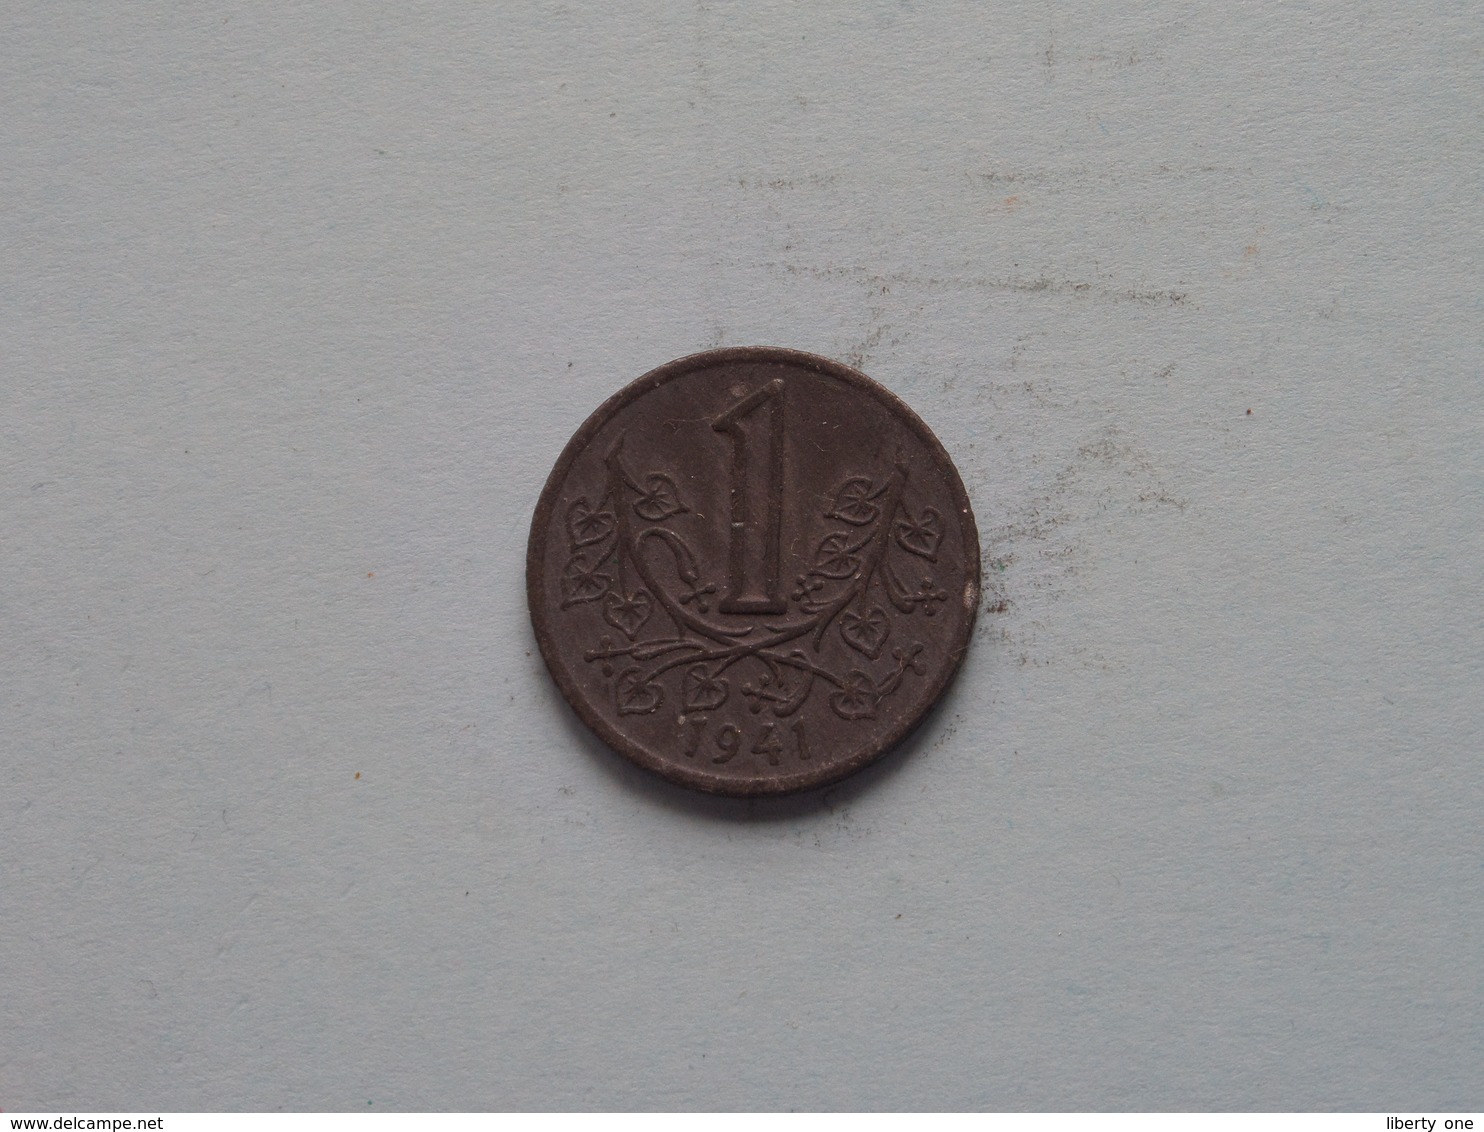 Böhmen Und Mähren 1941 - Koruna / KM 4 ( Uncleaned Coin / For Grade, Please See Photo ) !! - Czech Republic